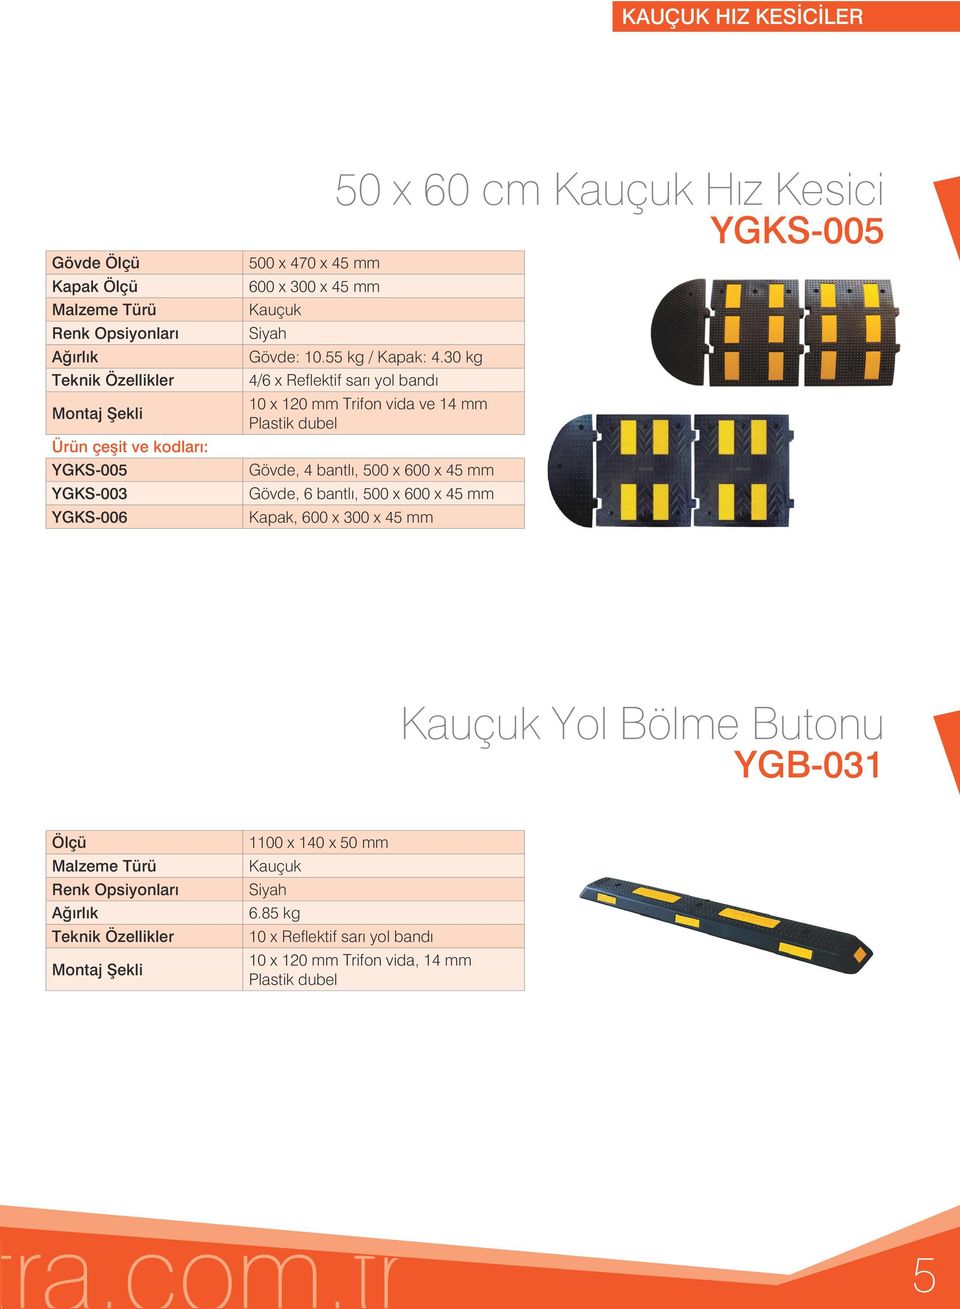 30 kg 4/6 x Reflektif sarı yol bandı 10 x 120 mm Trifon vida ve 14 mm Plastik dubel Gövde, 4 bantlı, 500 x 600 x 45 mm Gövde, 6